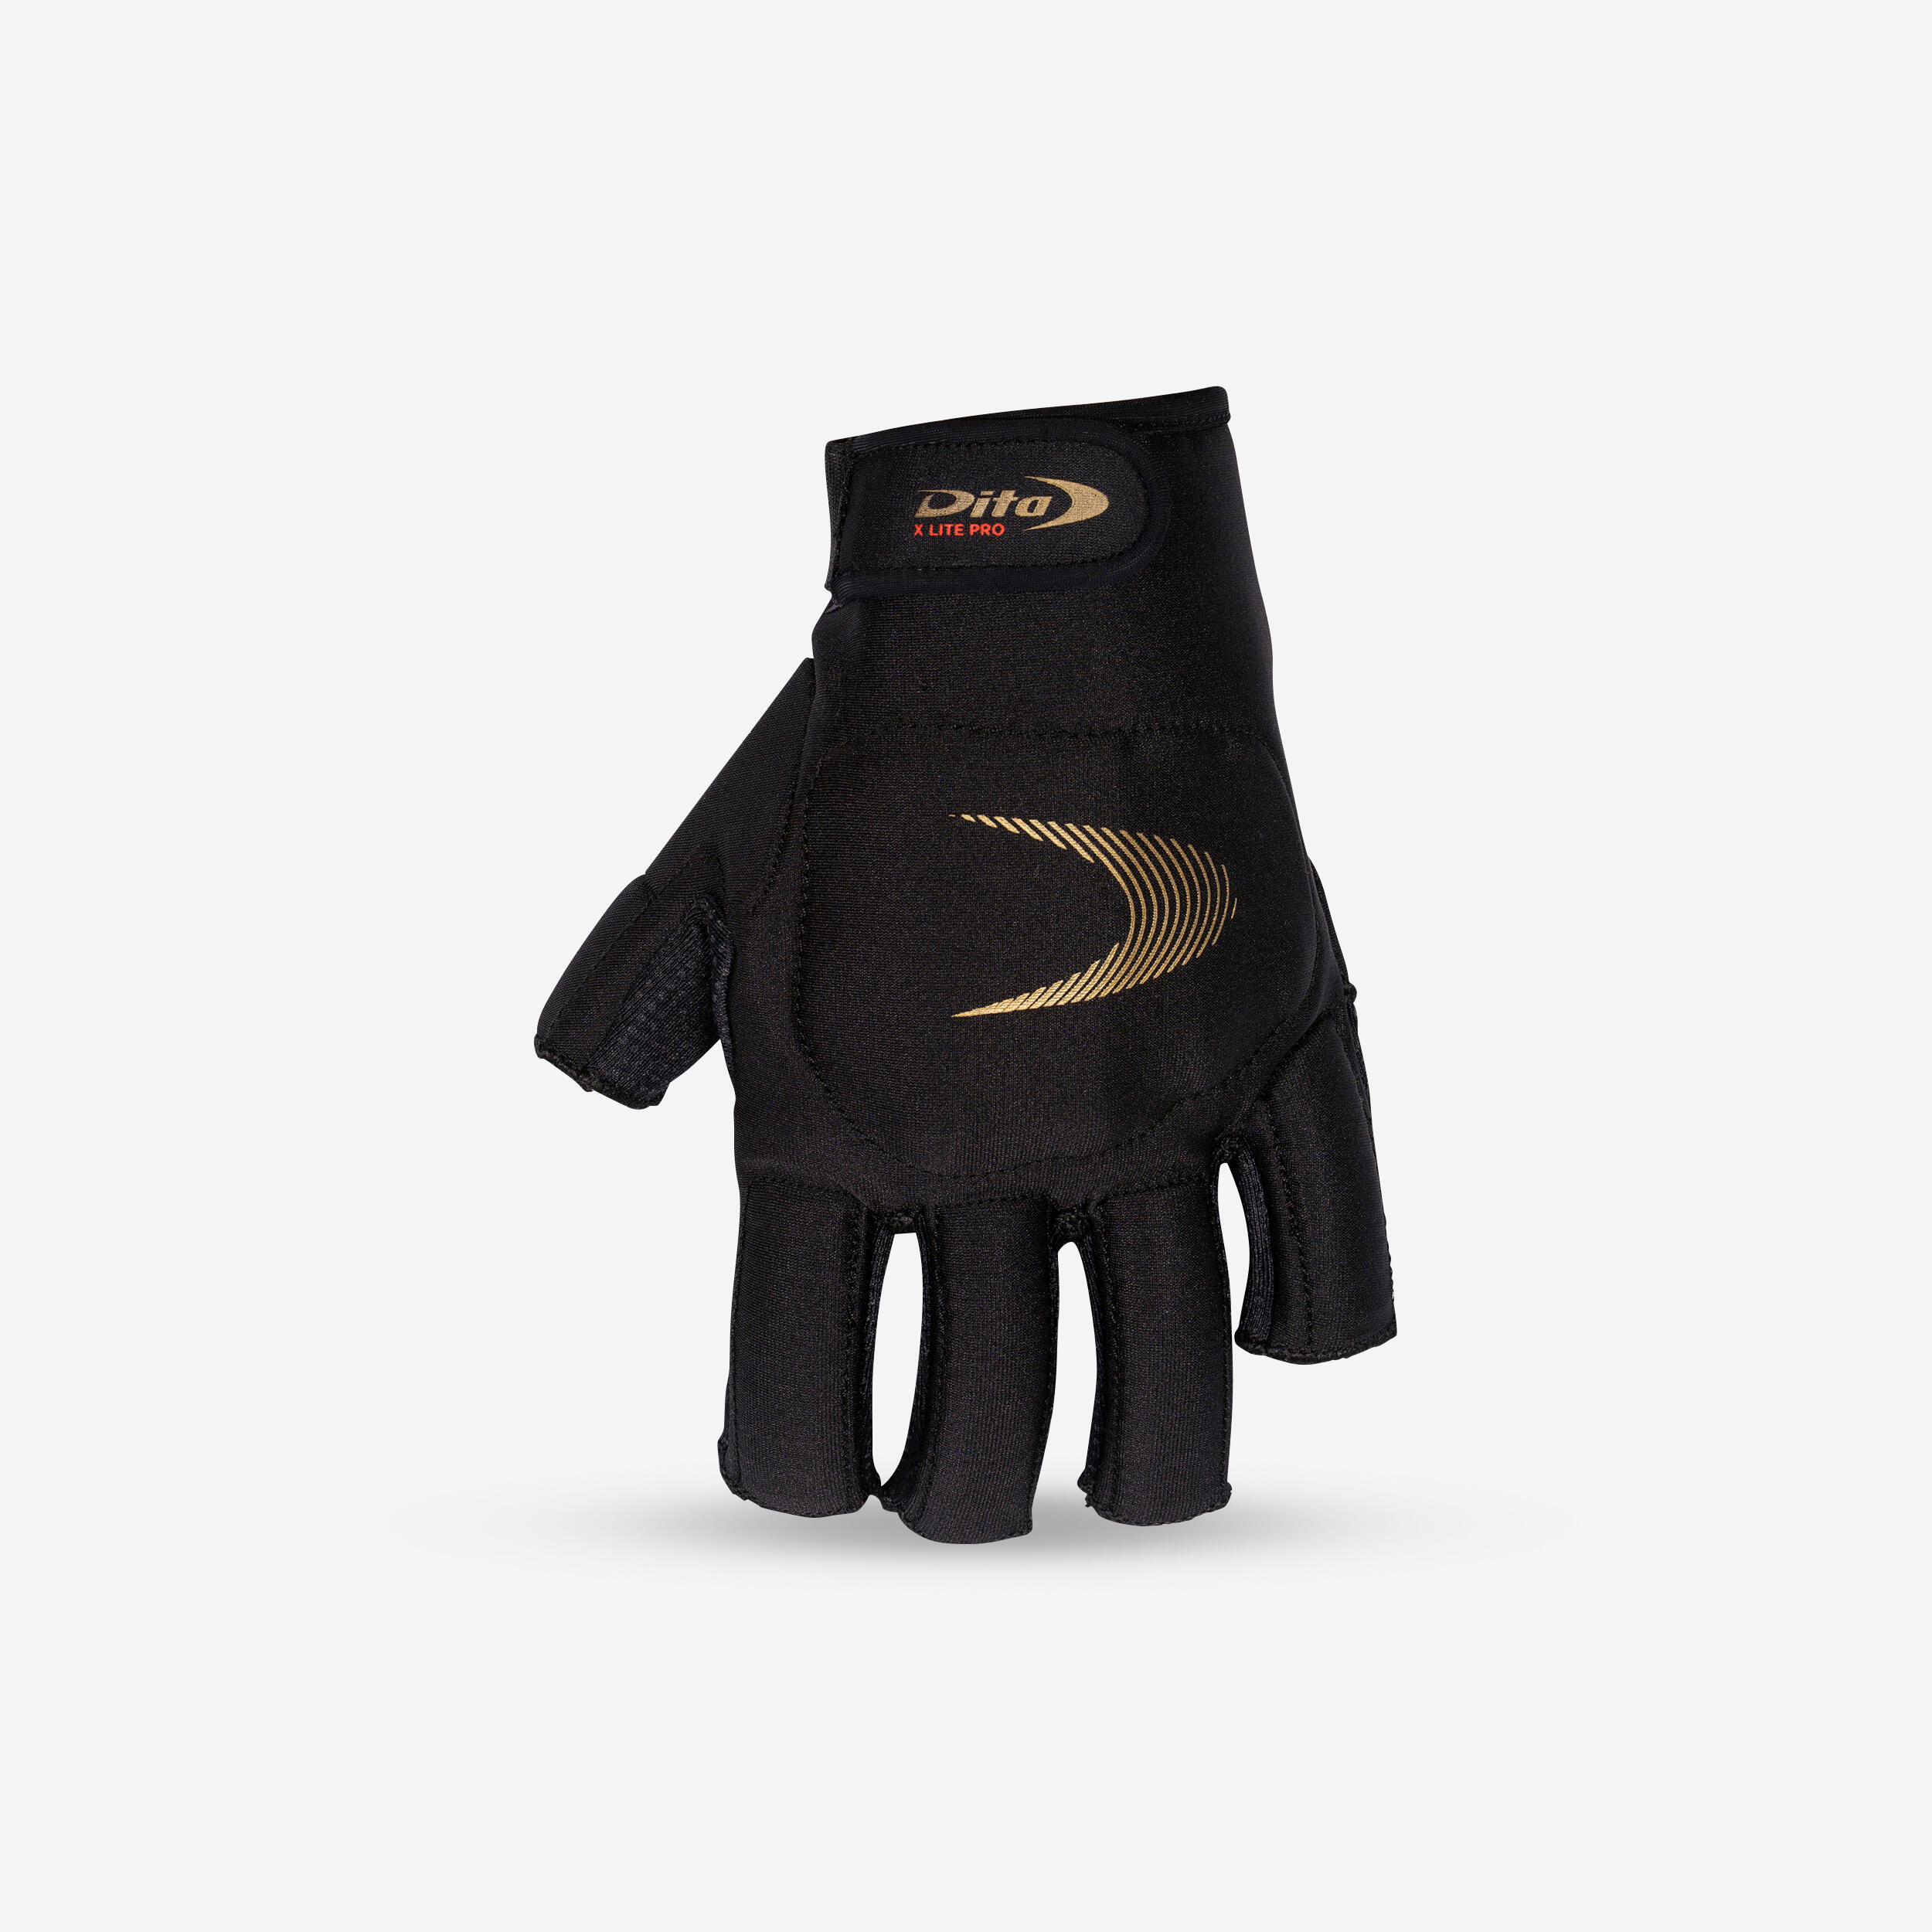 Kids'/Adult Moderate-Intensity 2 Knuckle Hockey Gloves Xlite Pro - Black 1/2